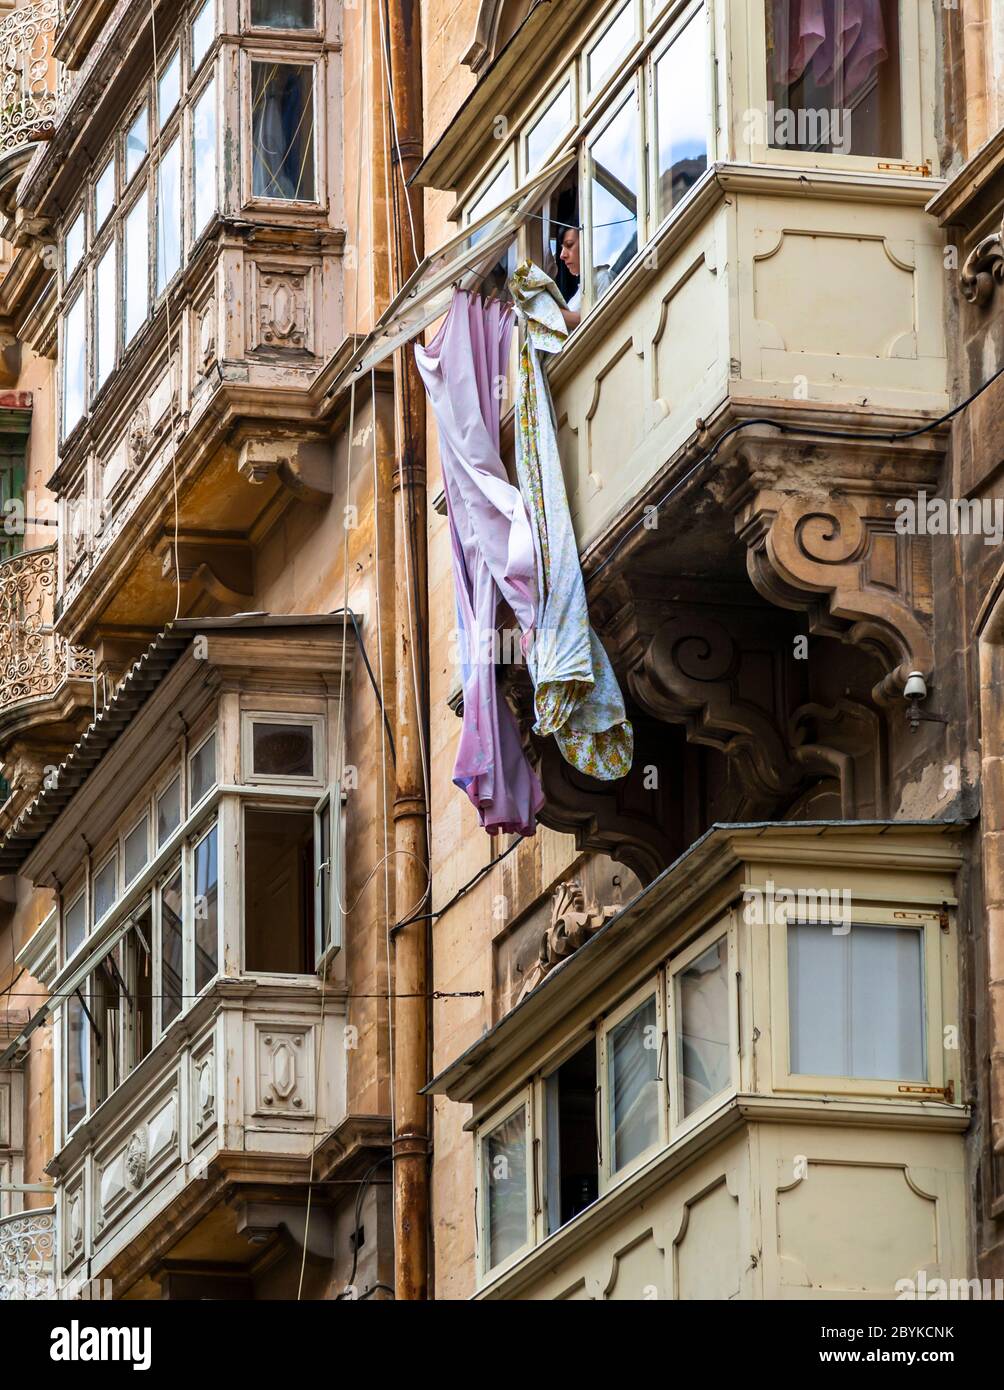 Malta covered balconies Stock Photo